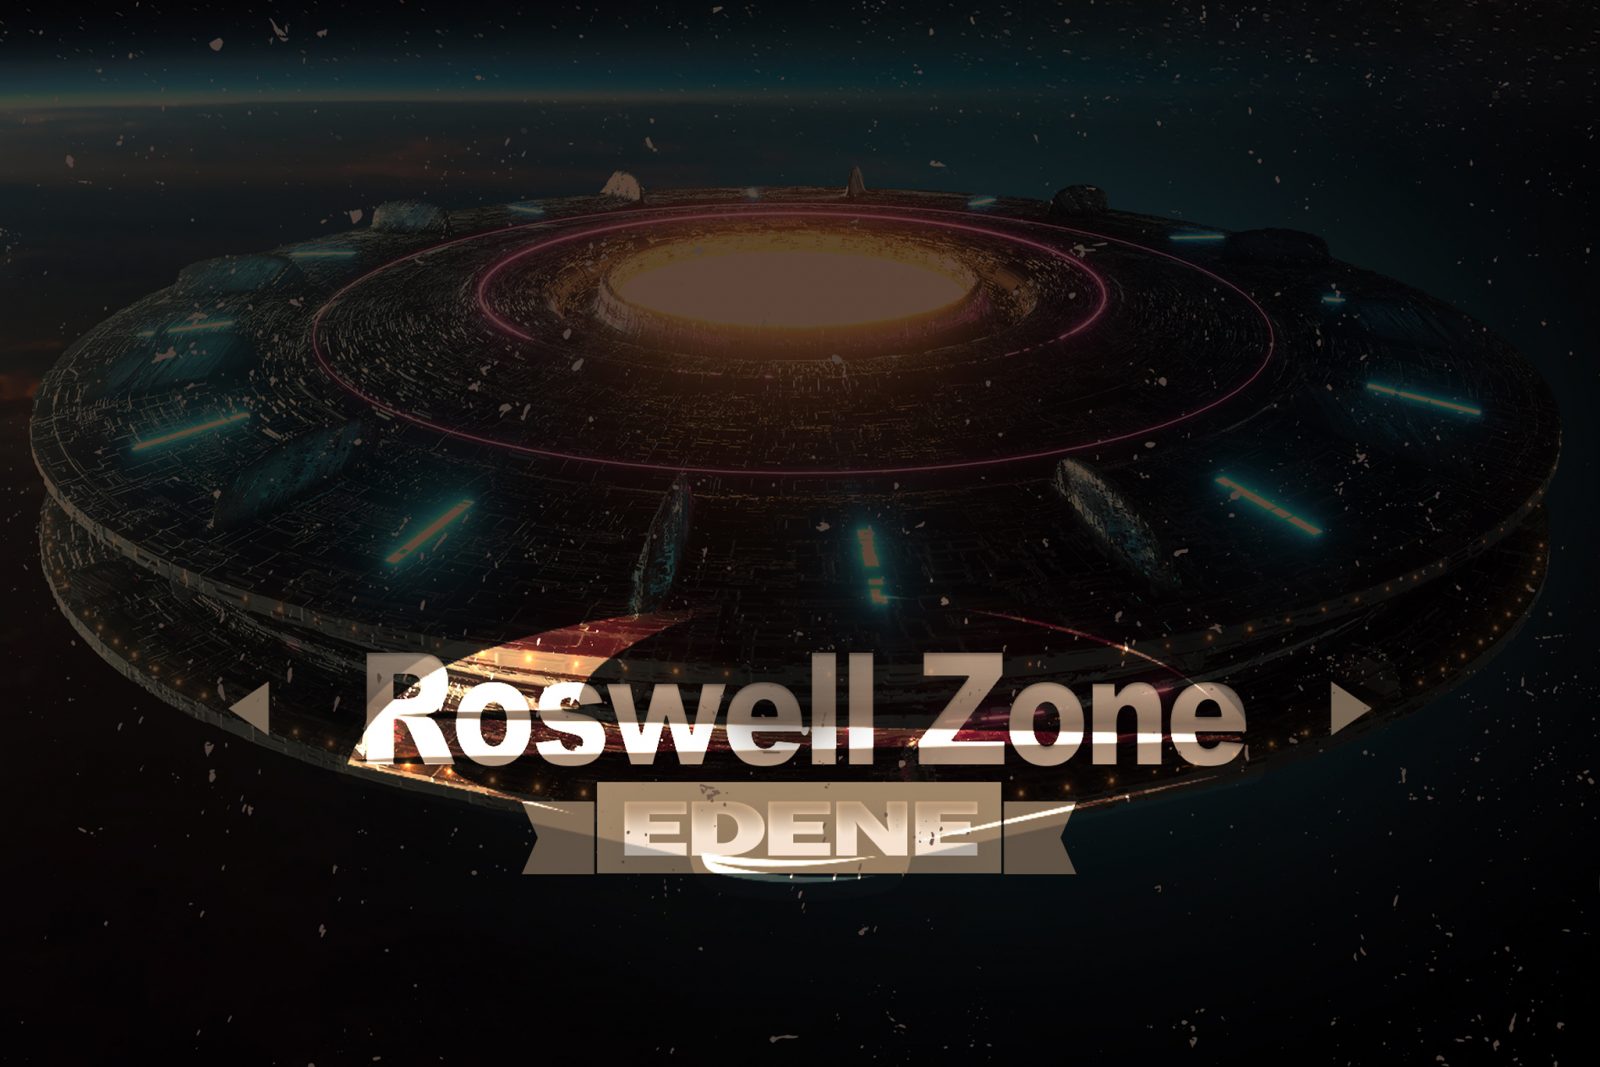 EDENE - Roswell Zone (space80)